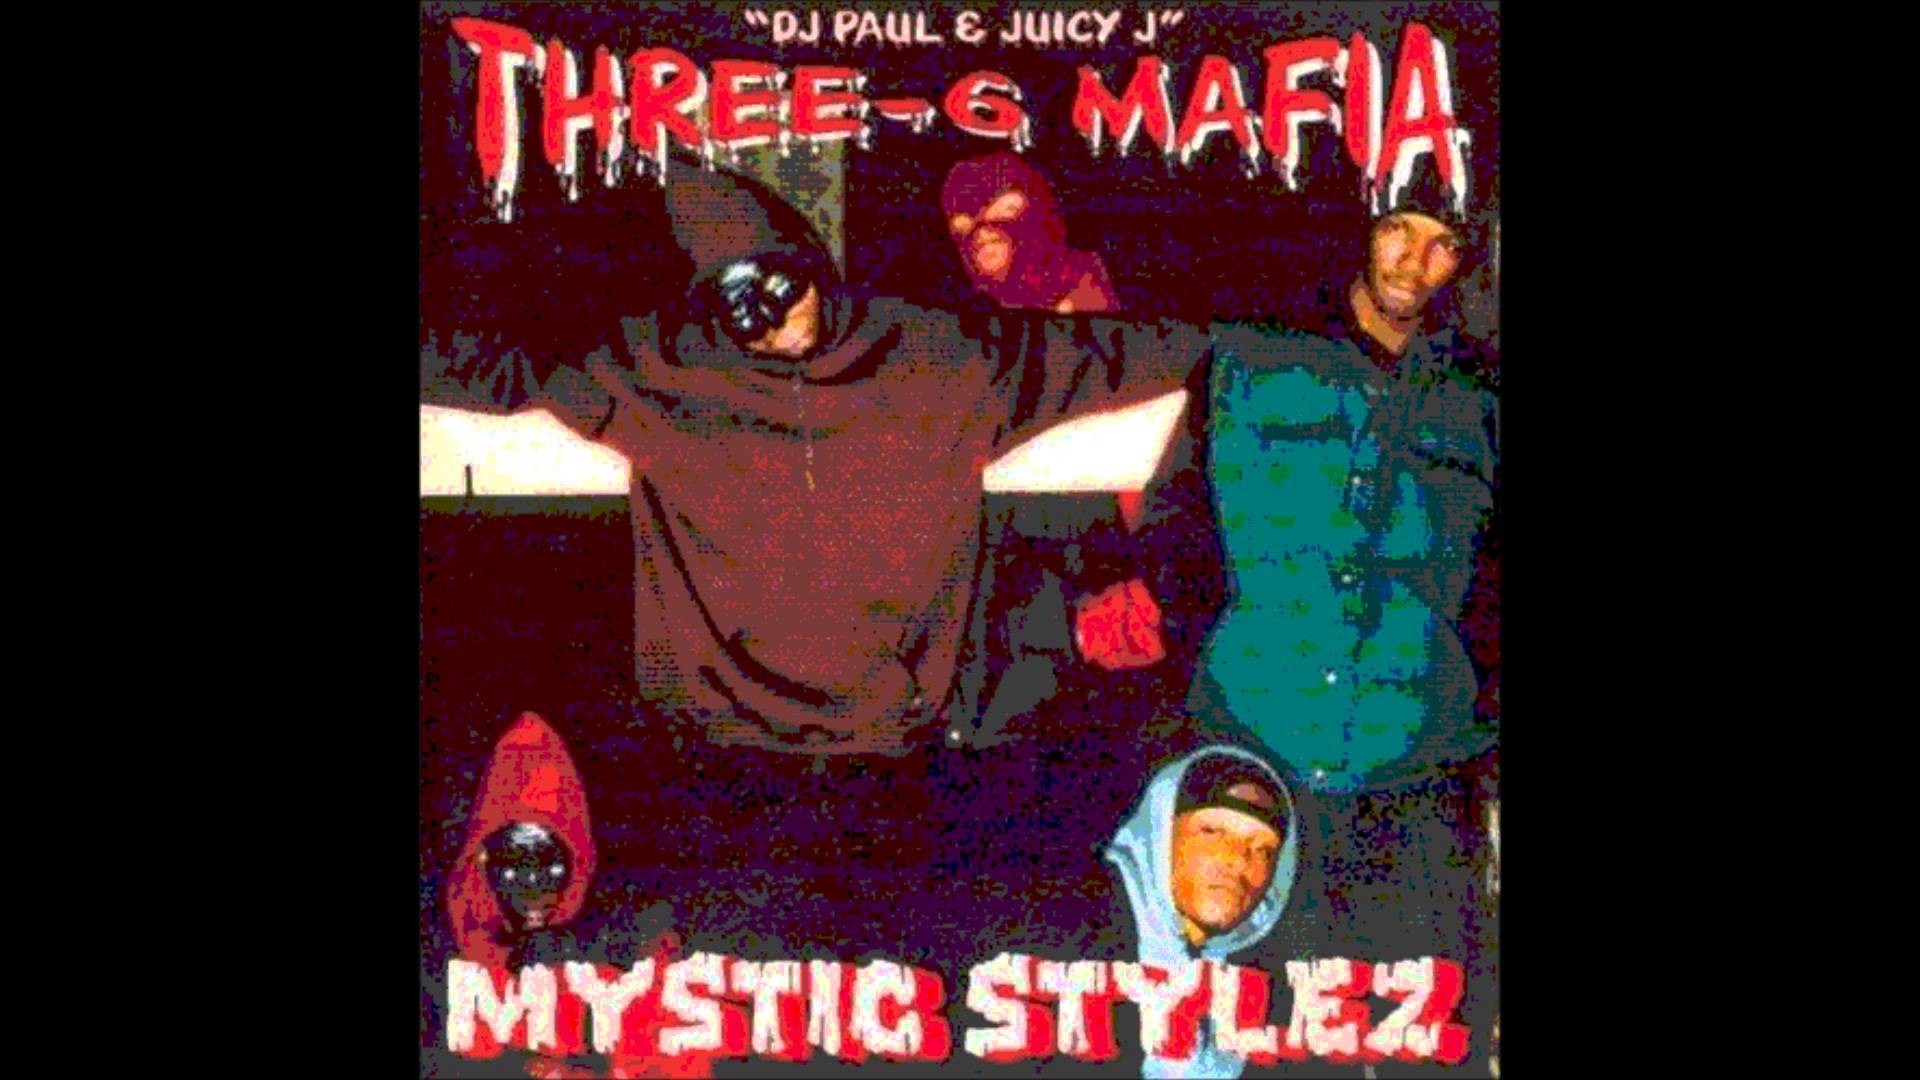 1920x1080 Three 6 Mafia - Mystic Stylez (ft. Playa Fly, MC Mack and La Chat) - YouTube